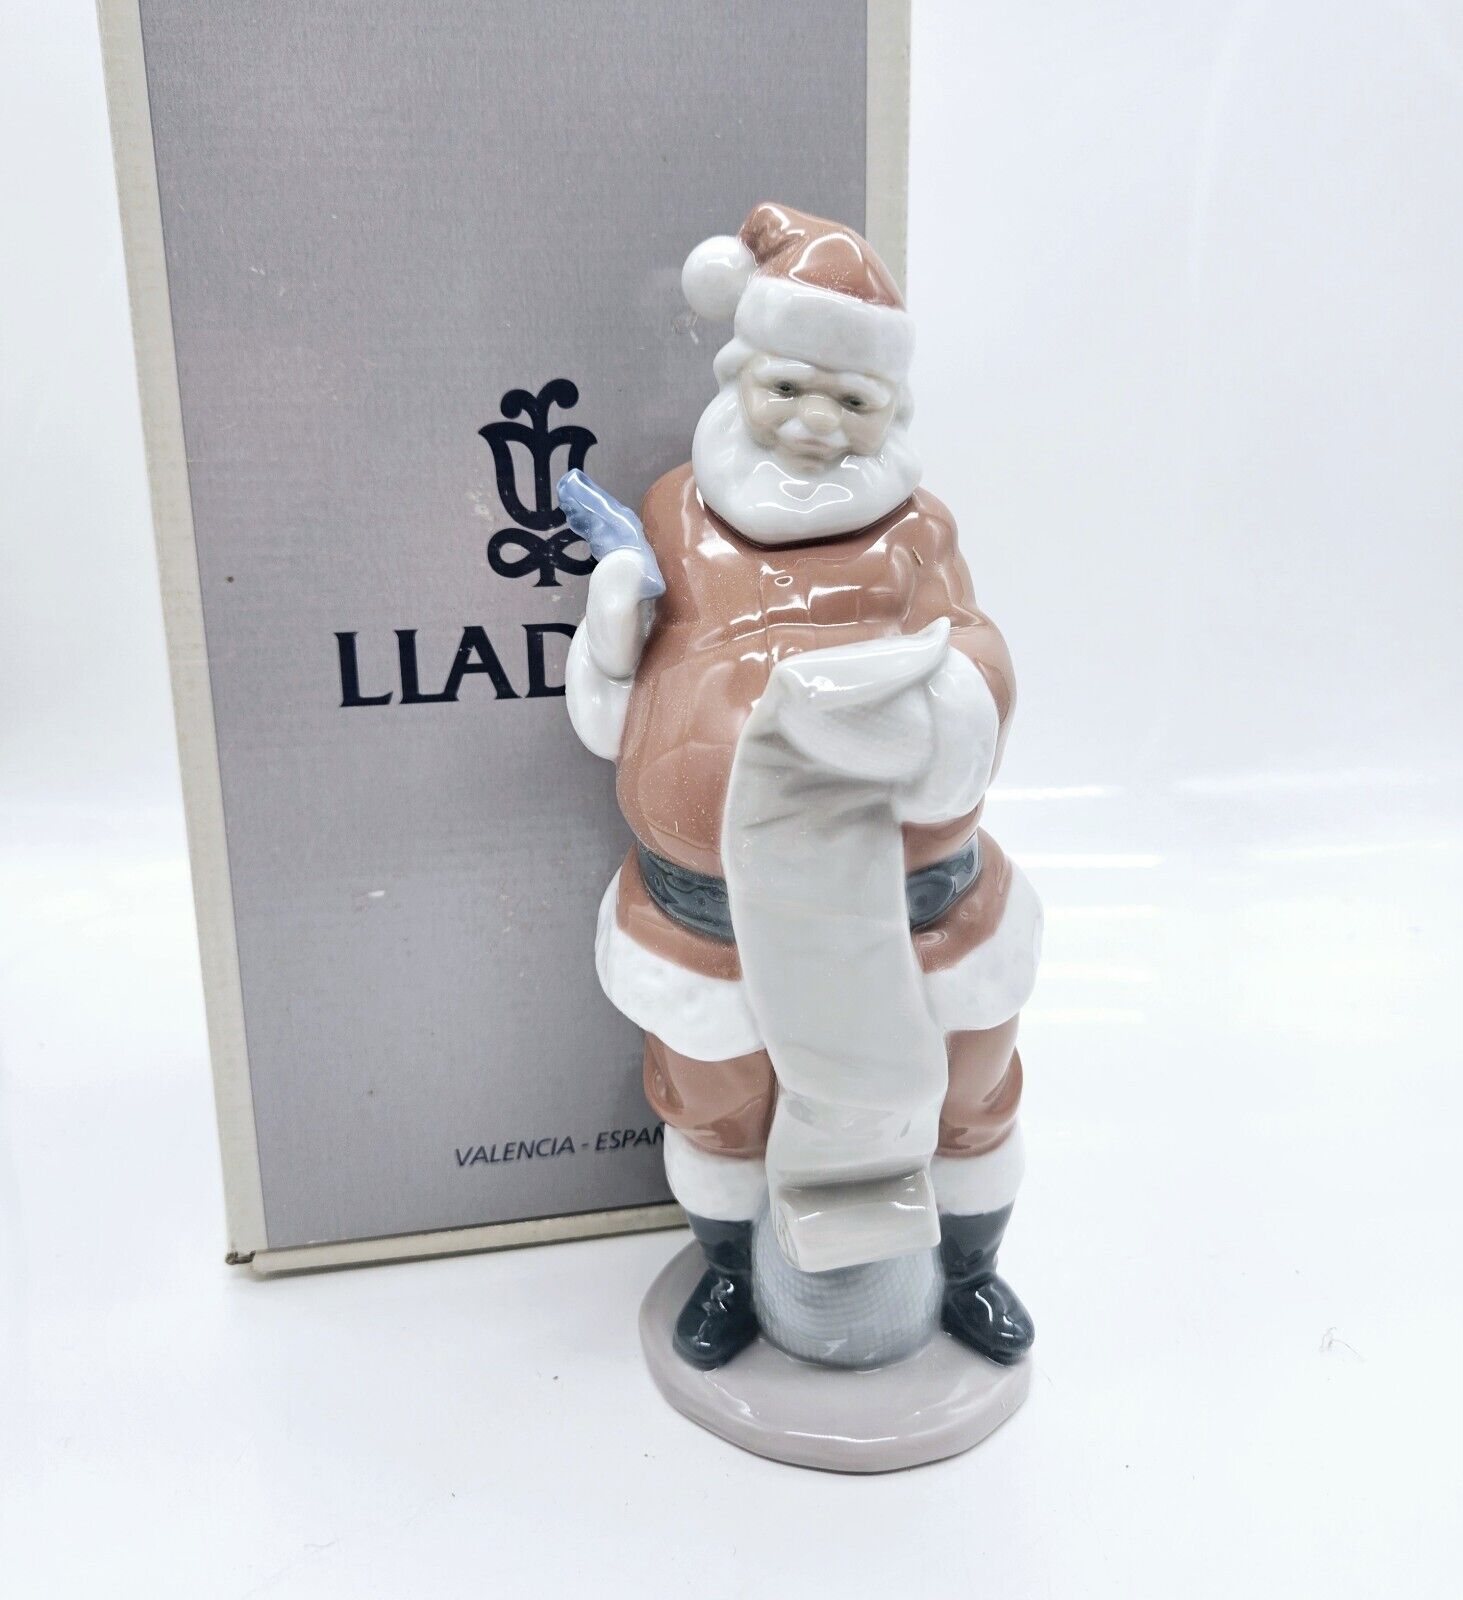 Lladro Santa Claus Porcelain Figurine 6657 Gift List 1999 by Juan Huerta 